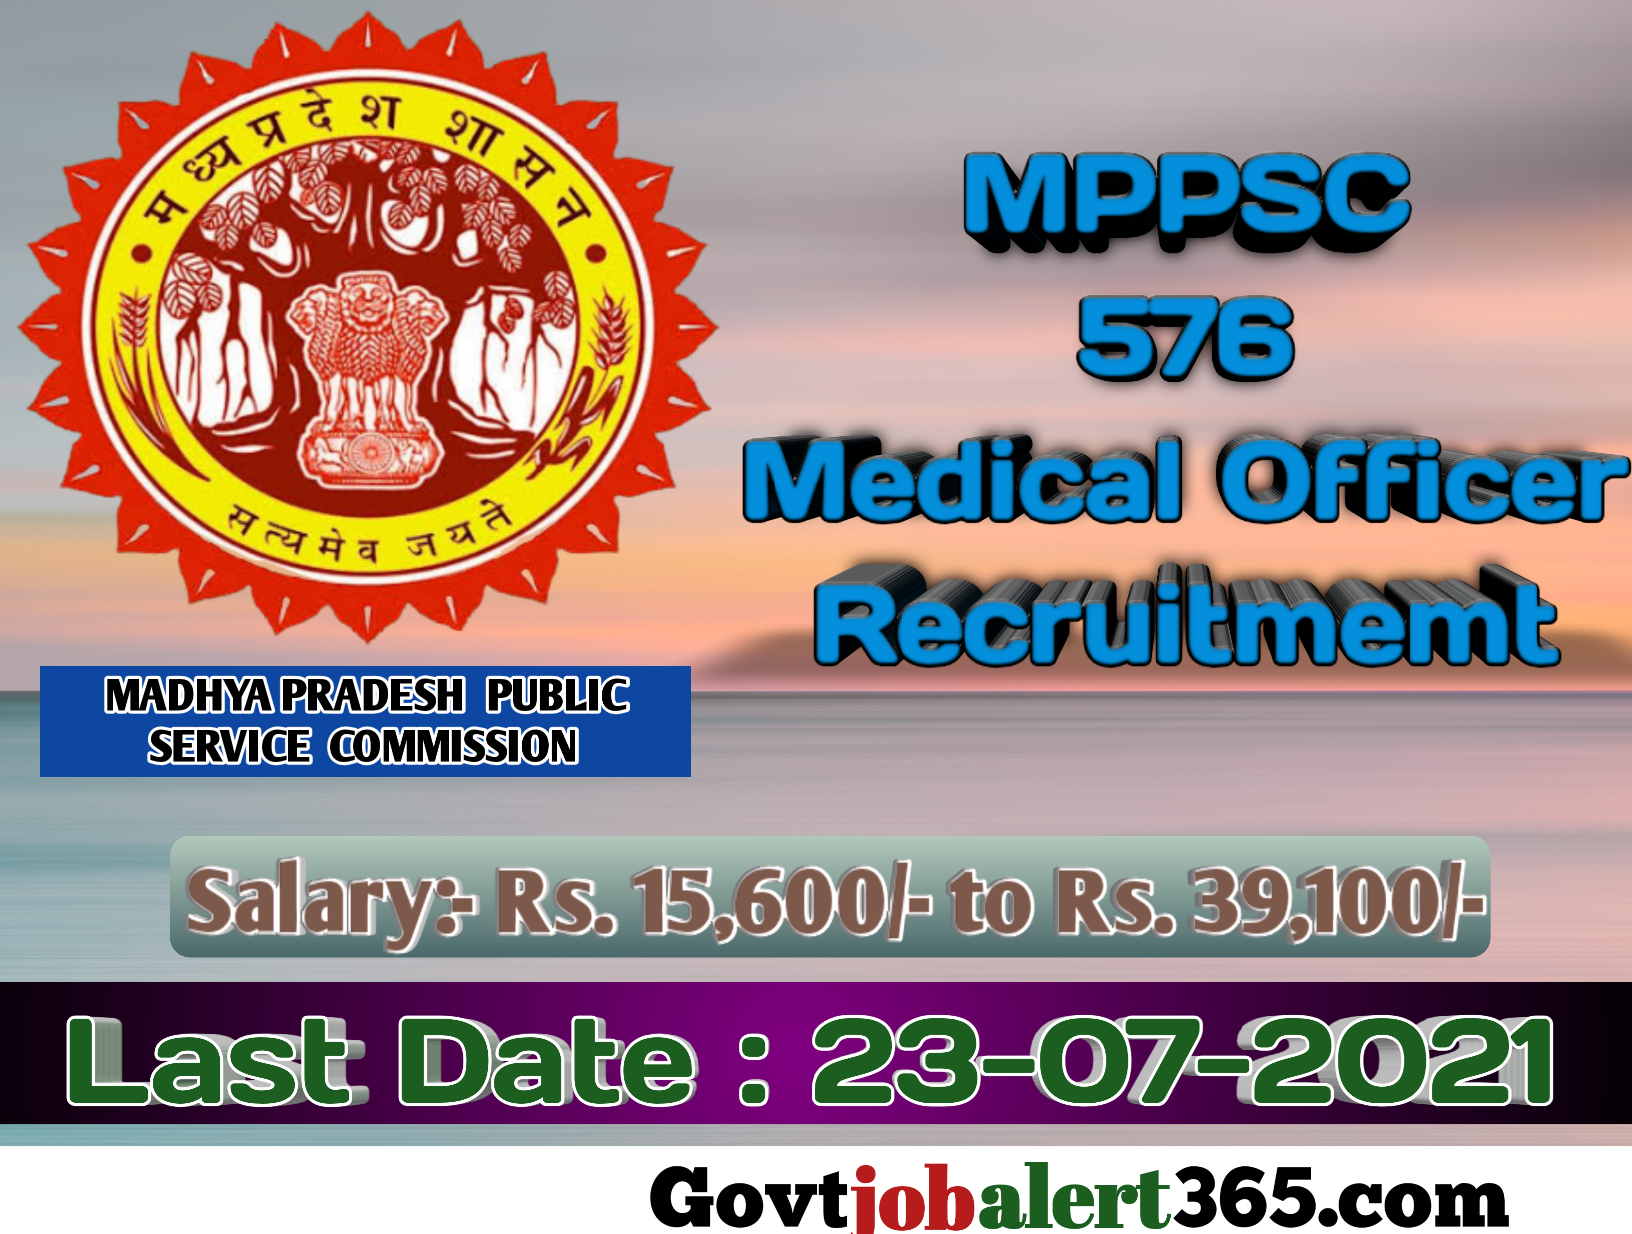 MPPSC Medical Officer Recruitment 2021